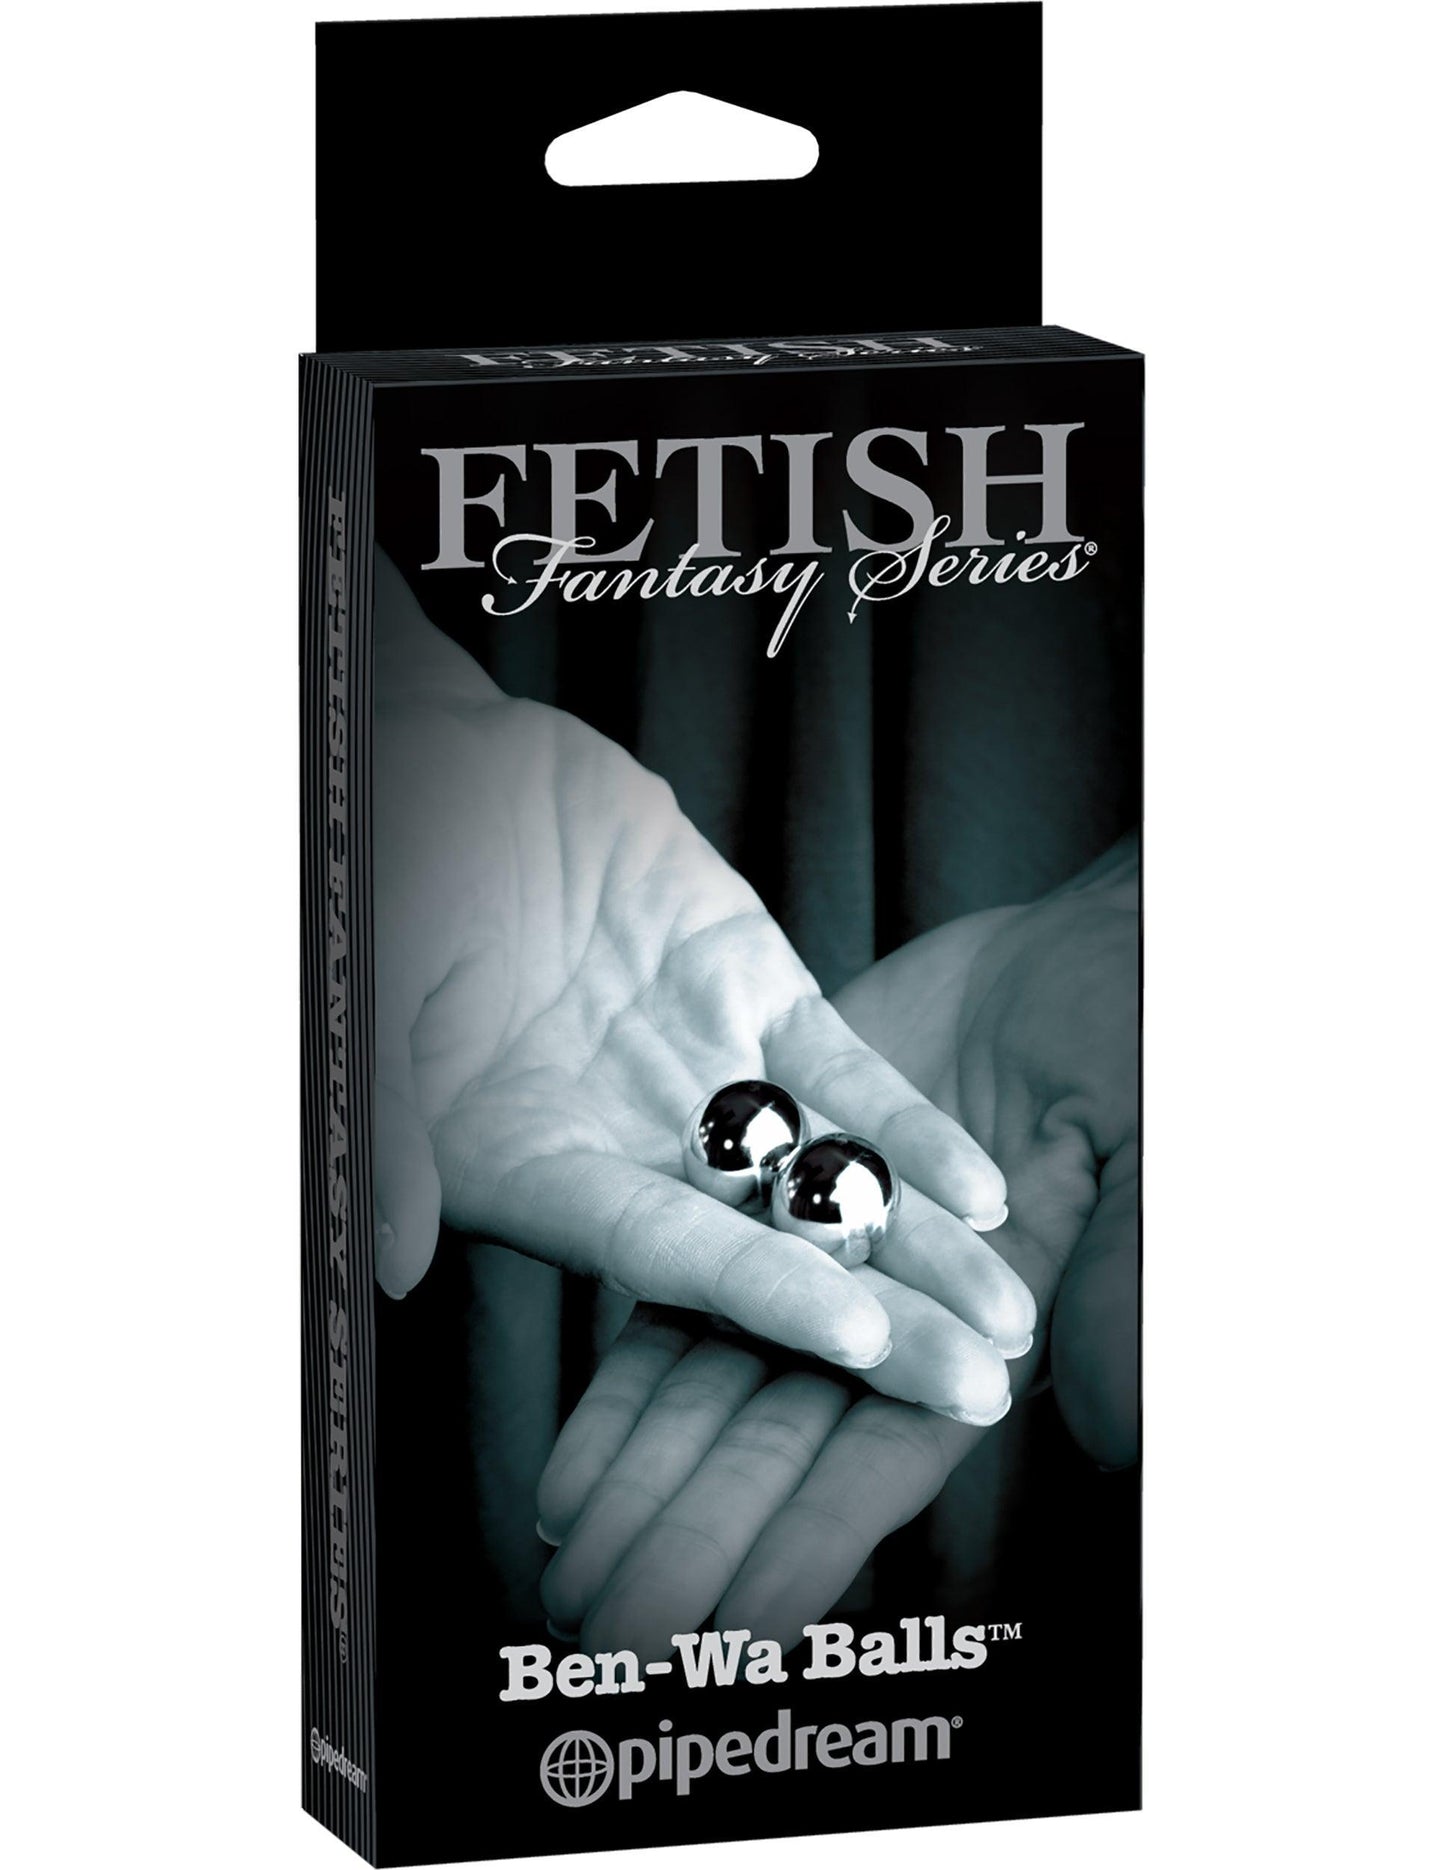 Fetish Fantasy Series Limited Edition Ben-Wa Balls - Silver - My Sex Toy Hub